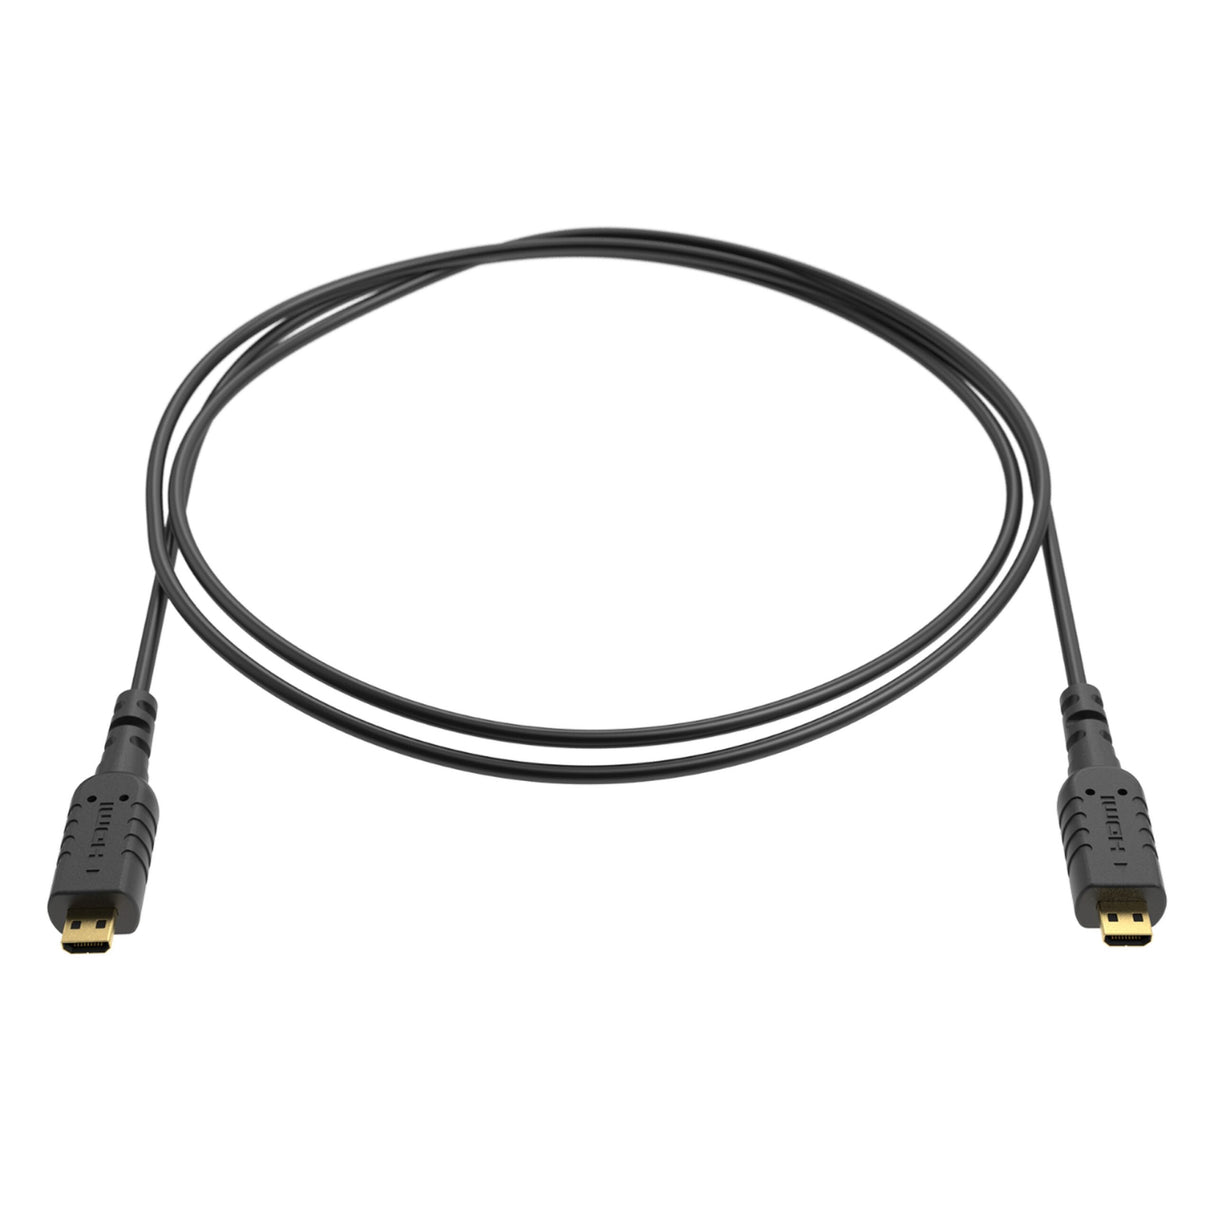 8Sinn eXtraThin HDMI Micro to HDMI Micro Cable, 80 Centimeters